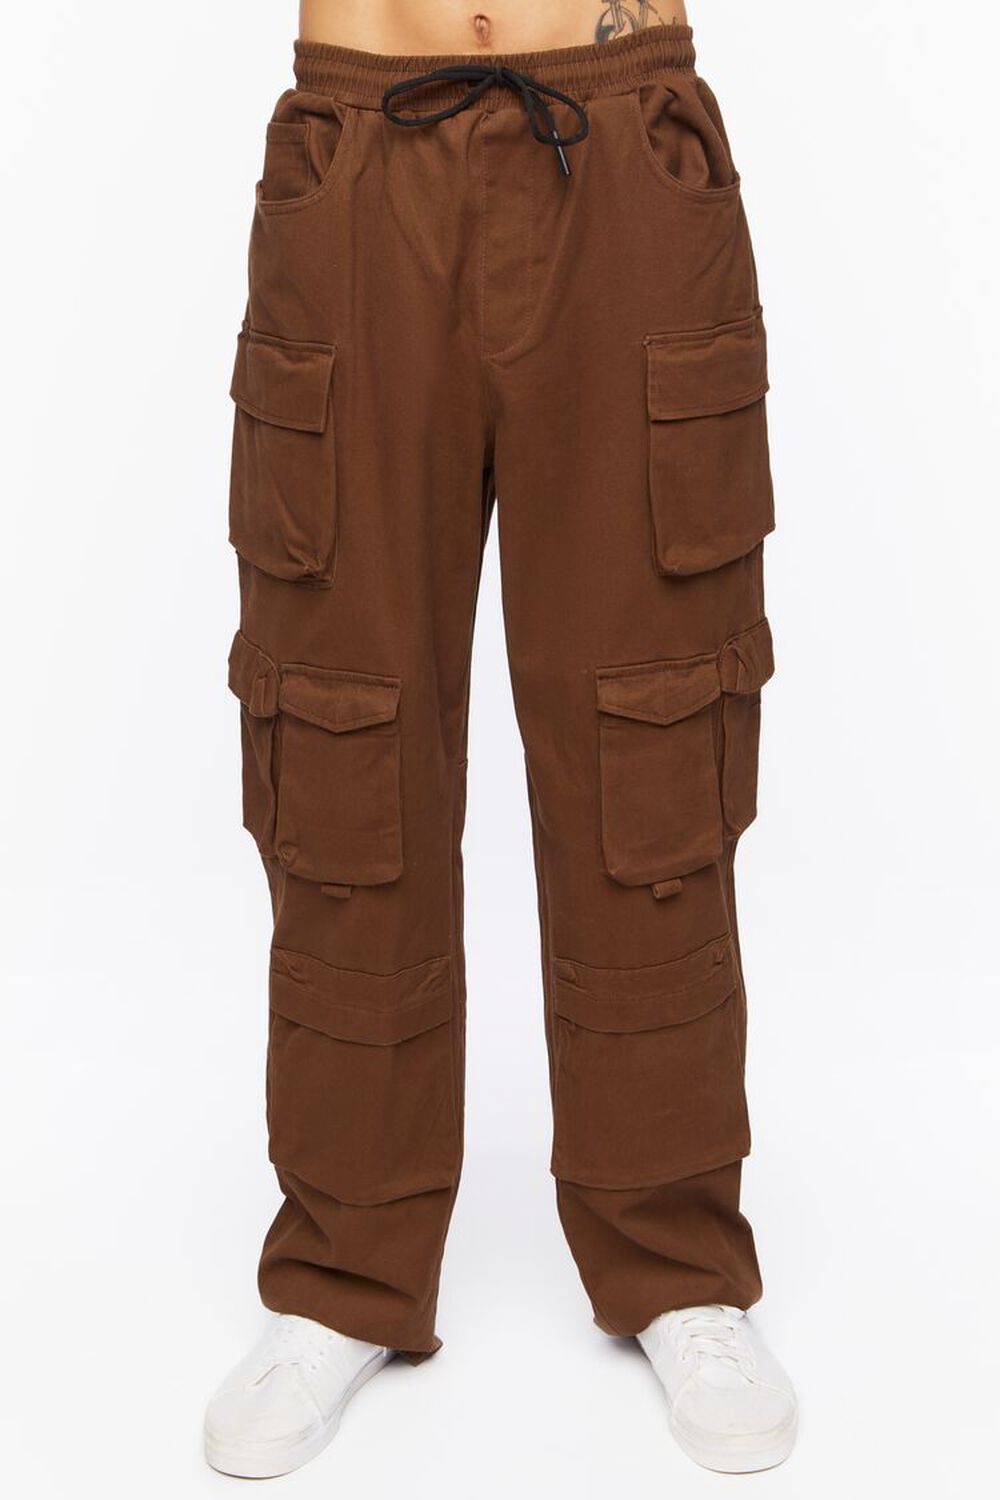 BROWN Straight-Leg Cargo Pants, image 2